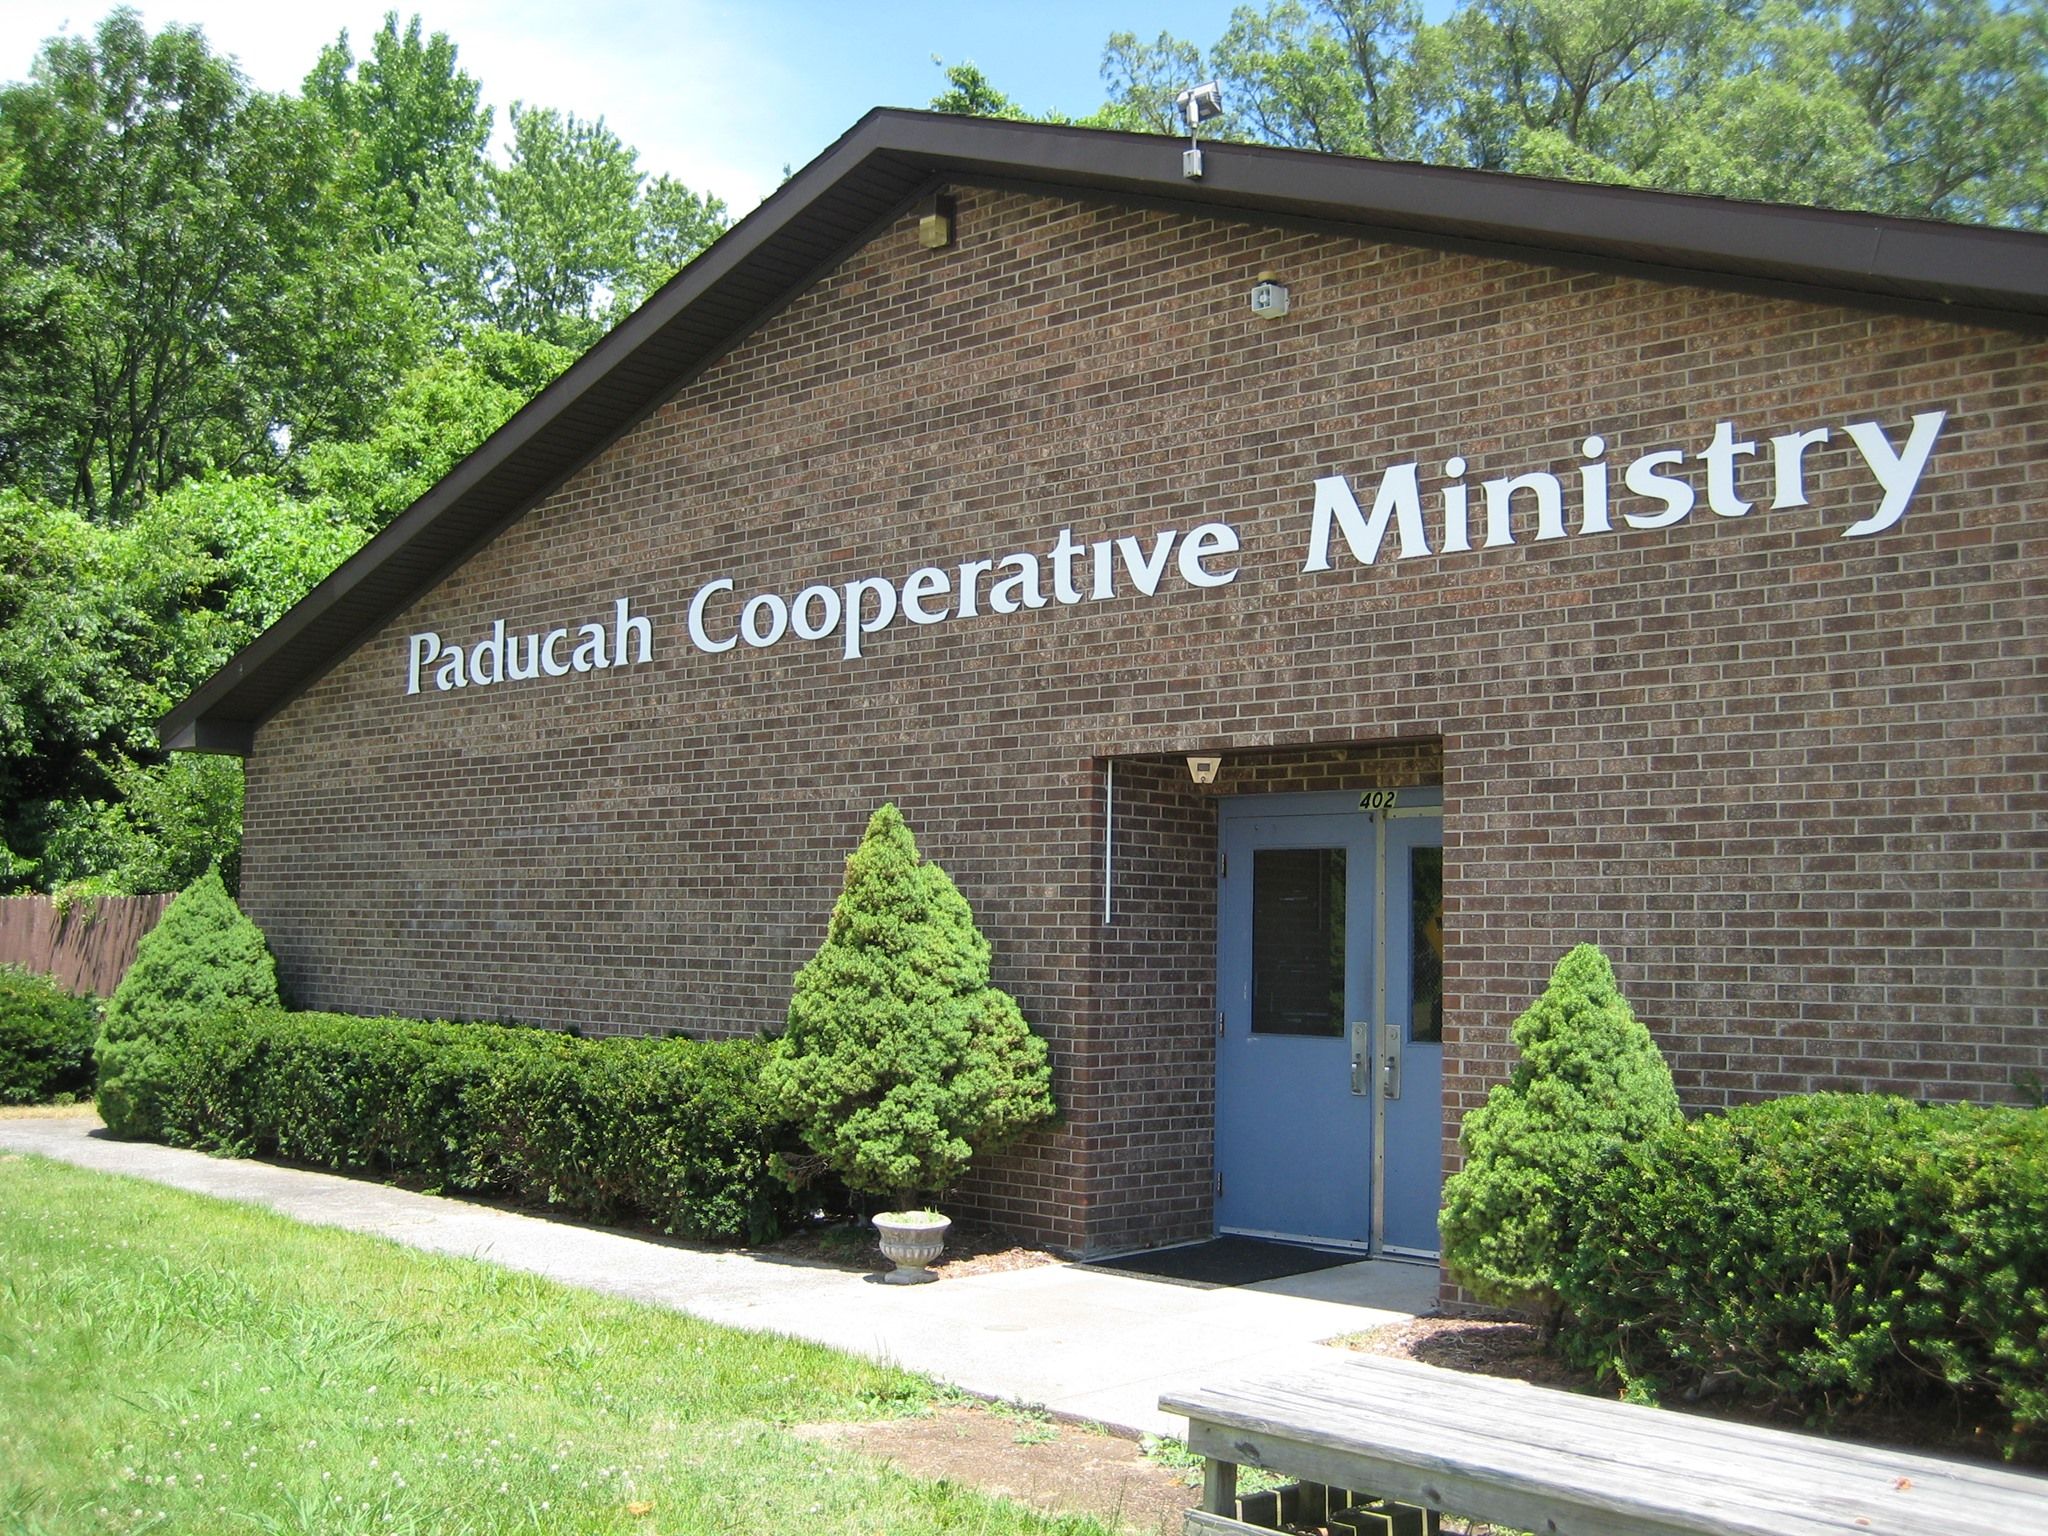 Paducah Cooperative Ministry